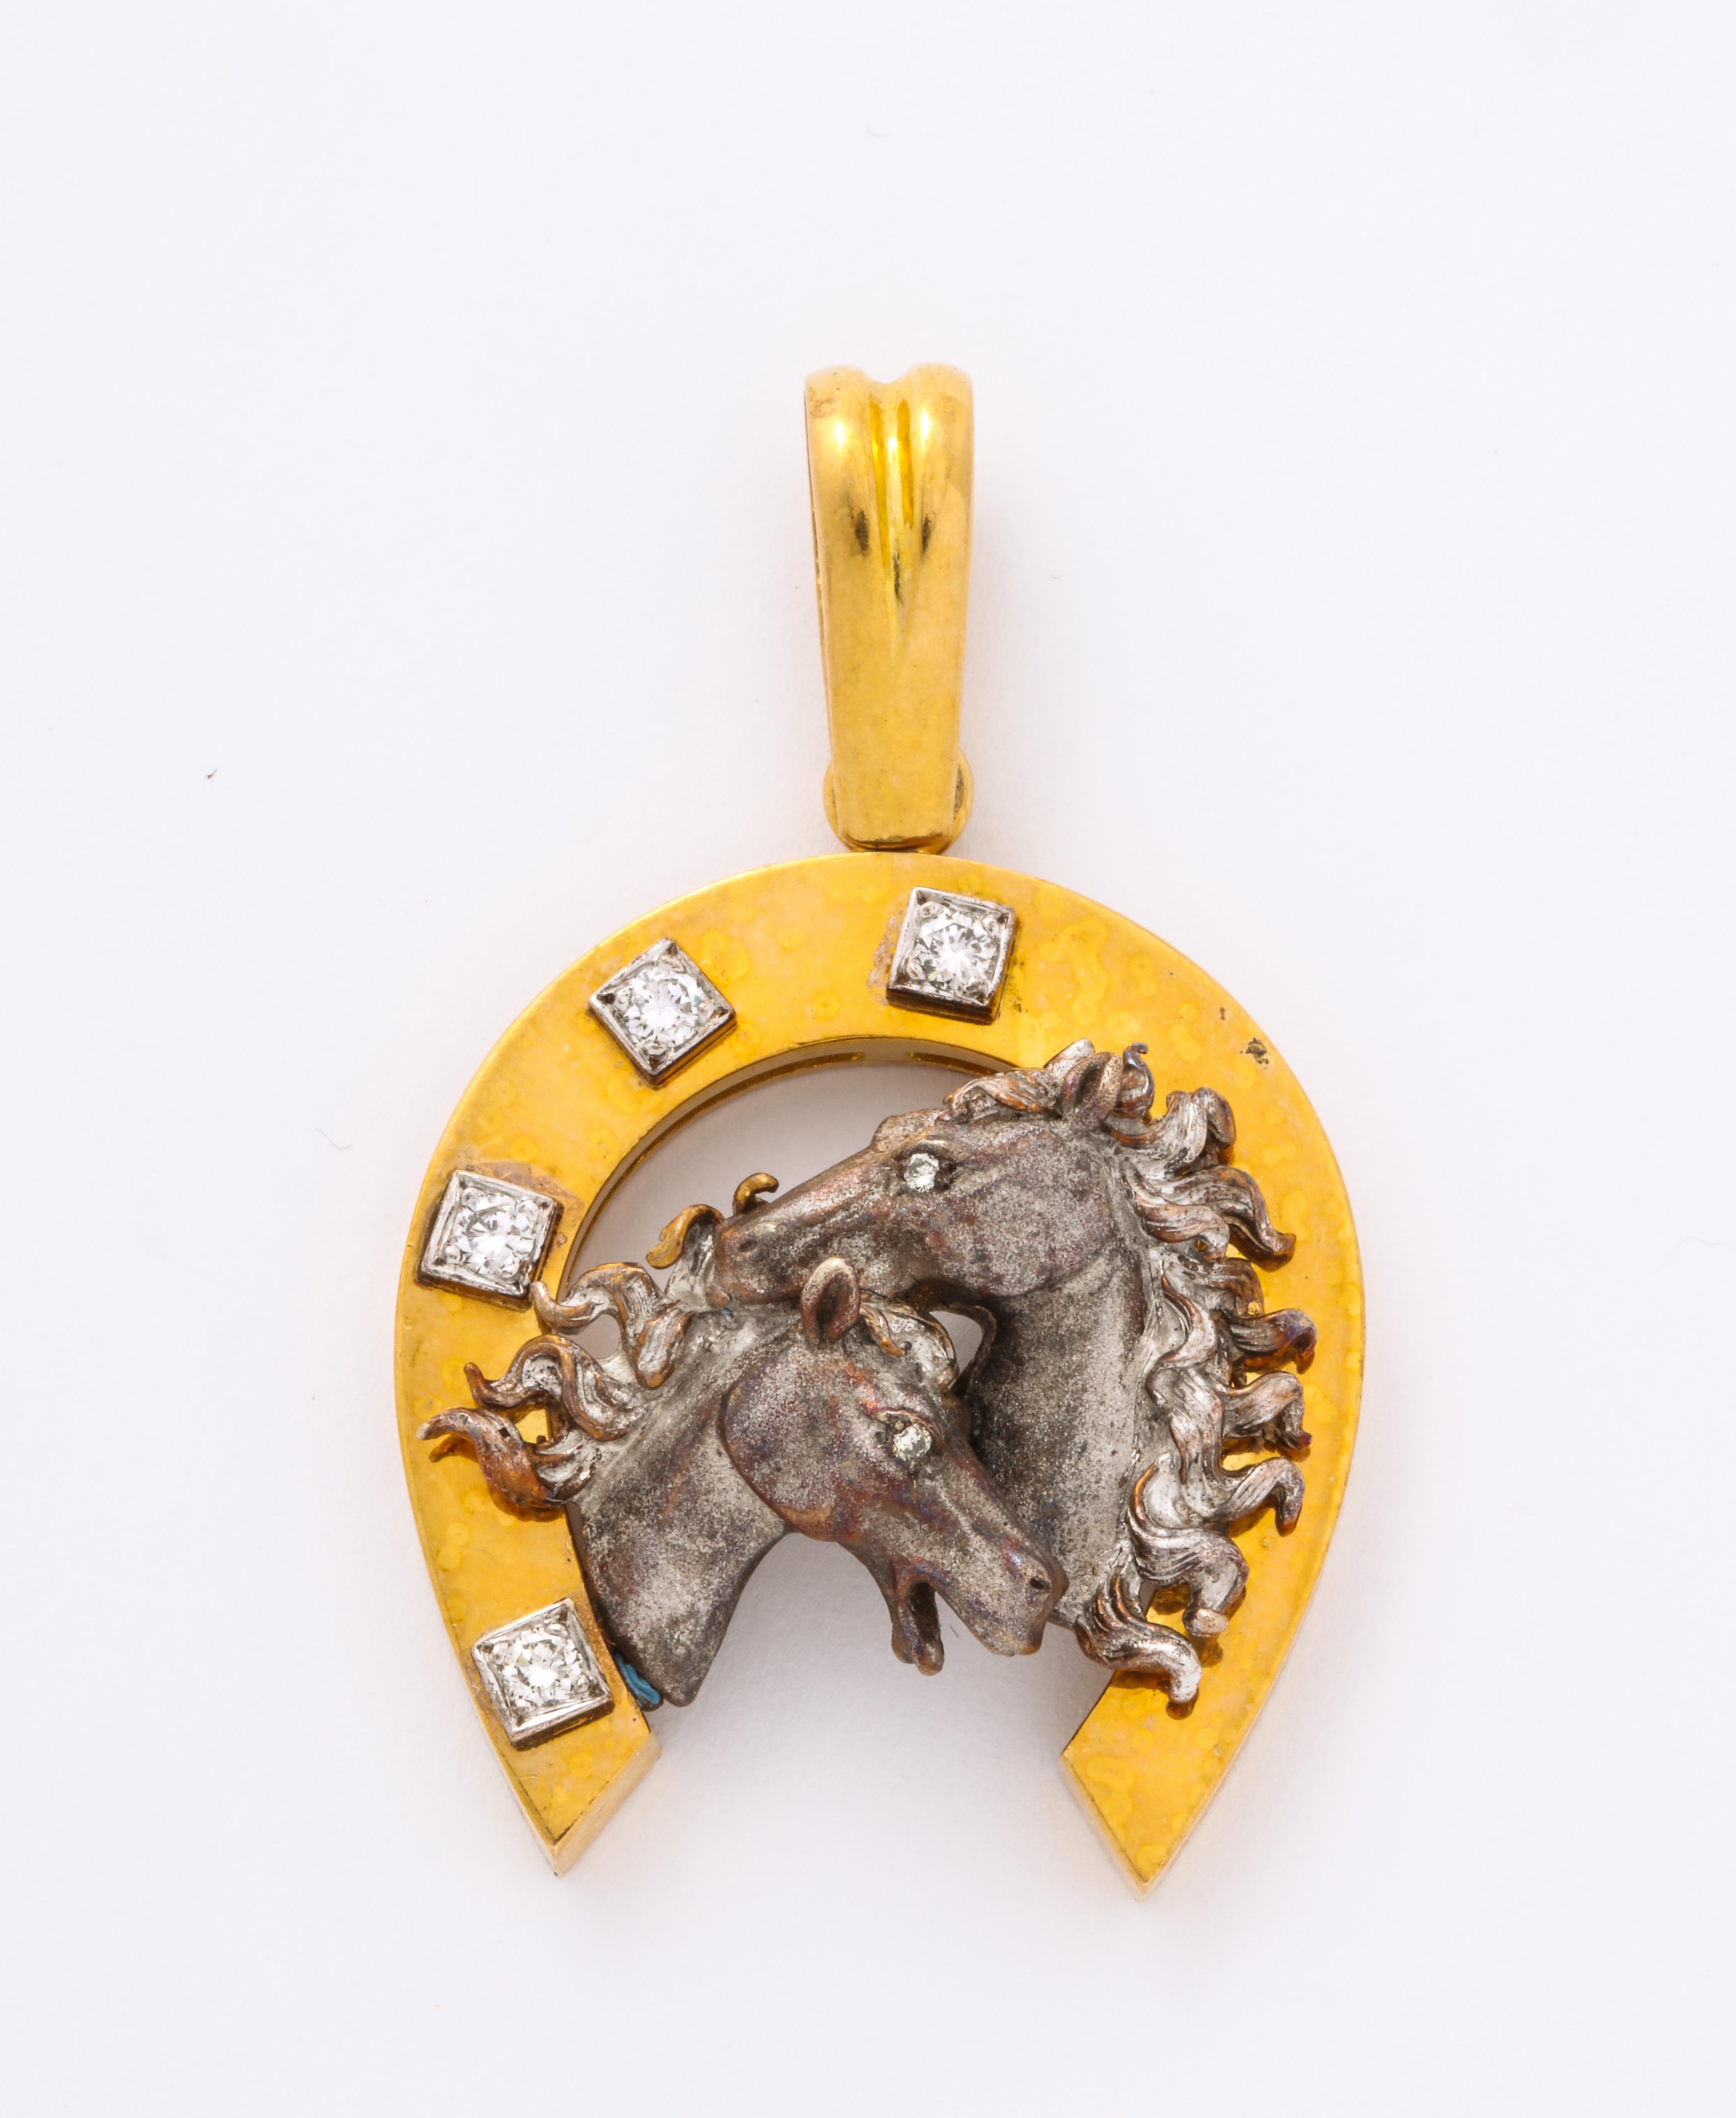 14 Karat Gold Horseshoe Pendant with 14 Karat White Gold Horses and Diamonds For Sale 1